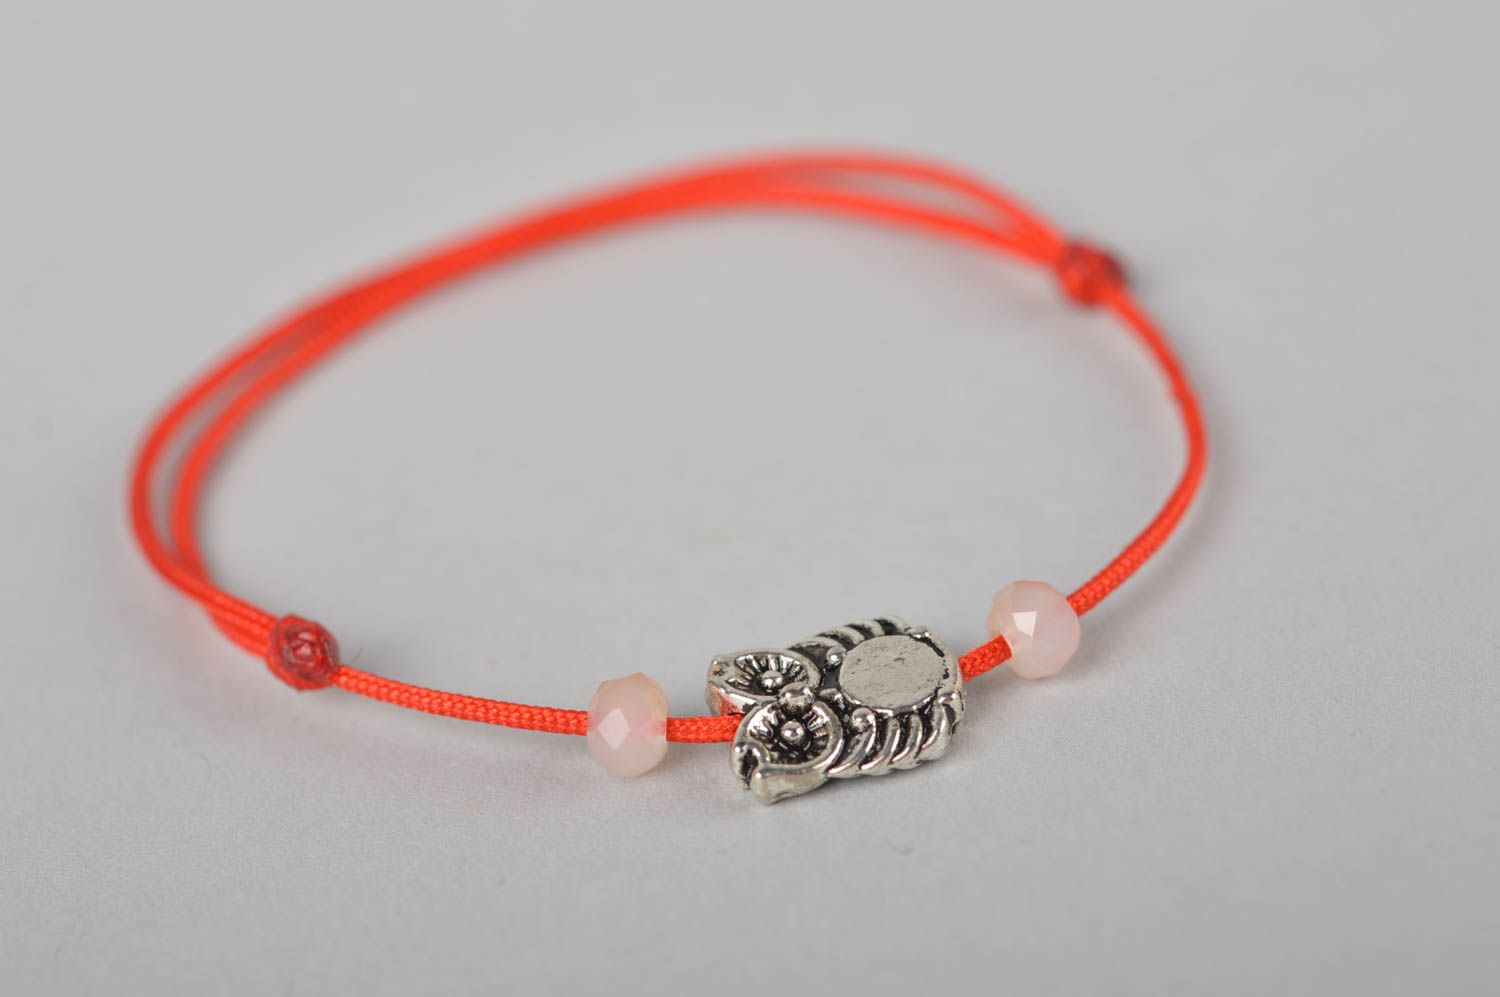 Stylish handmade thread bracelet fashion tips casual jewelry designs gift ideas photo 2